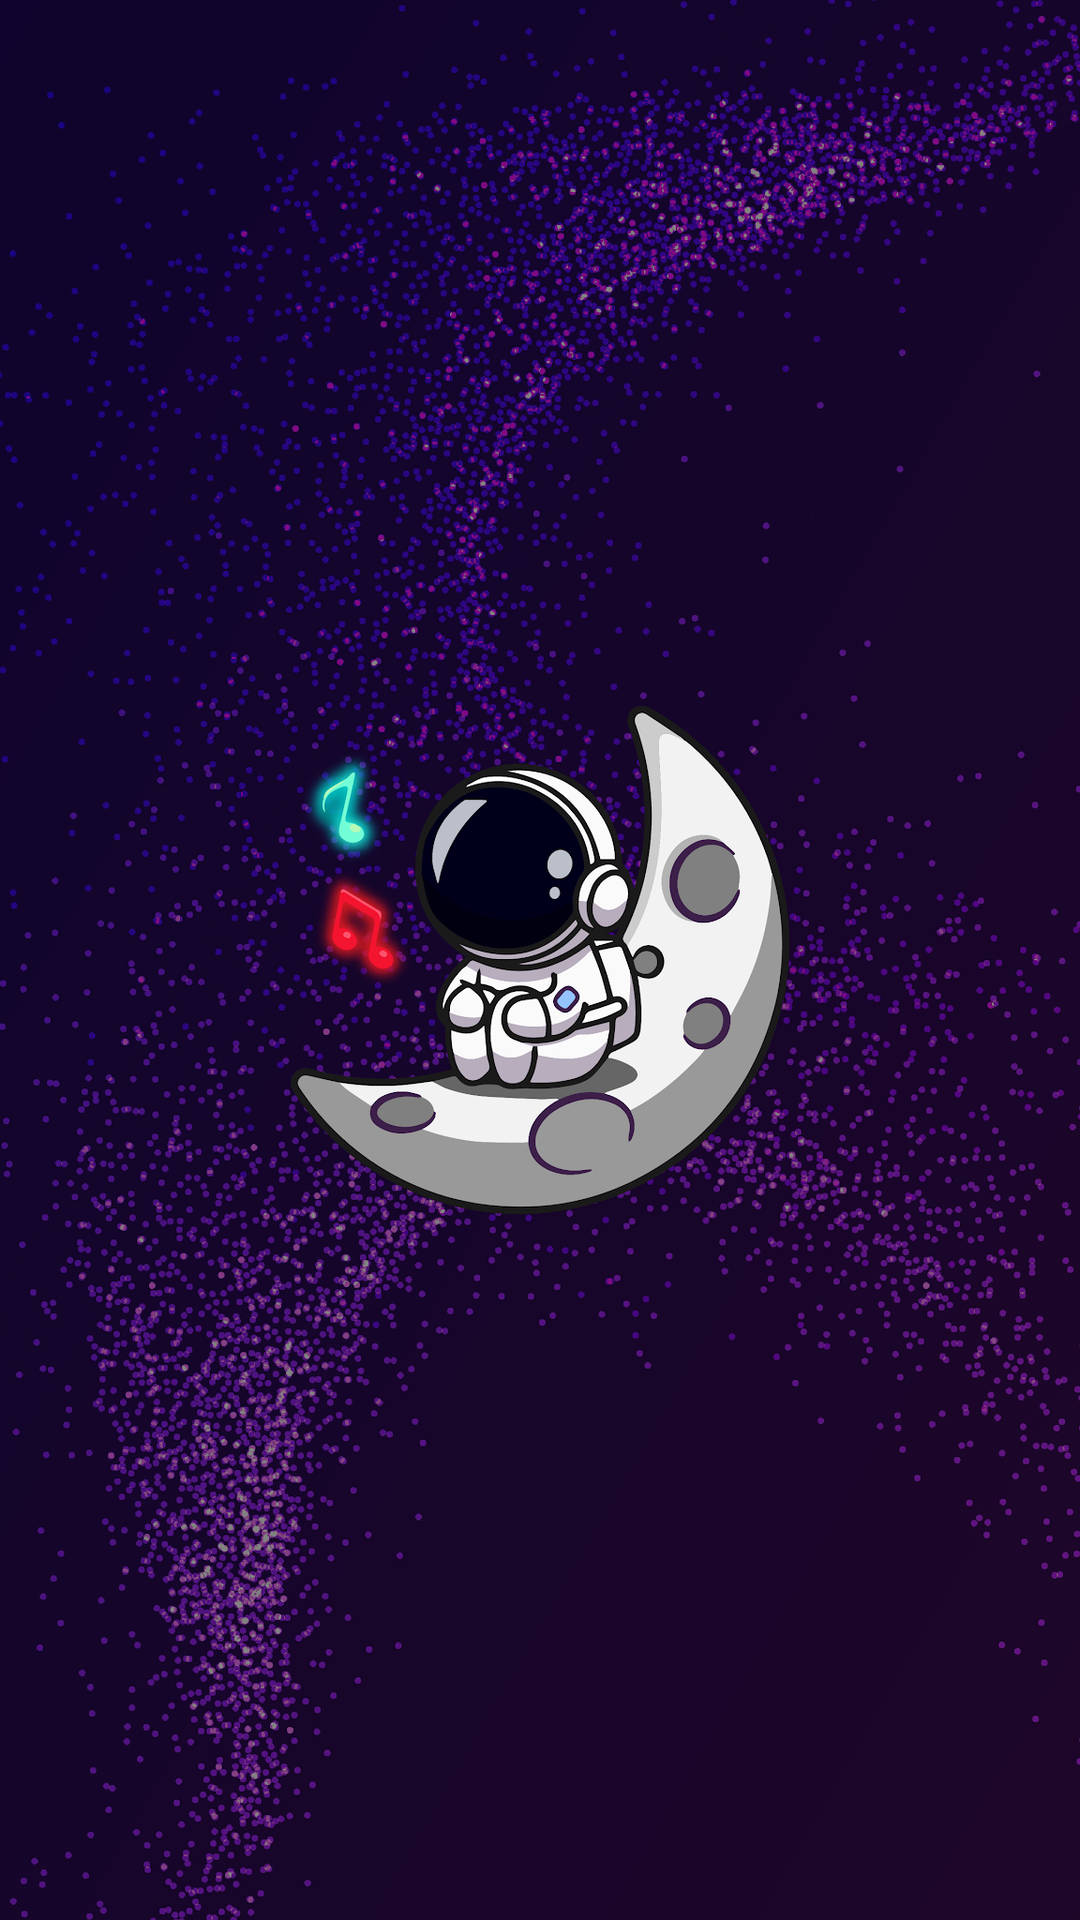 Cartoon Astronaut Singing On The Moon Wallpaper